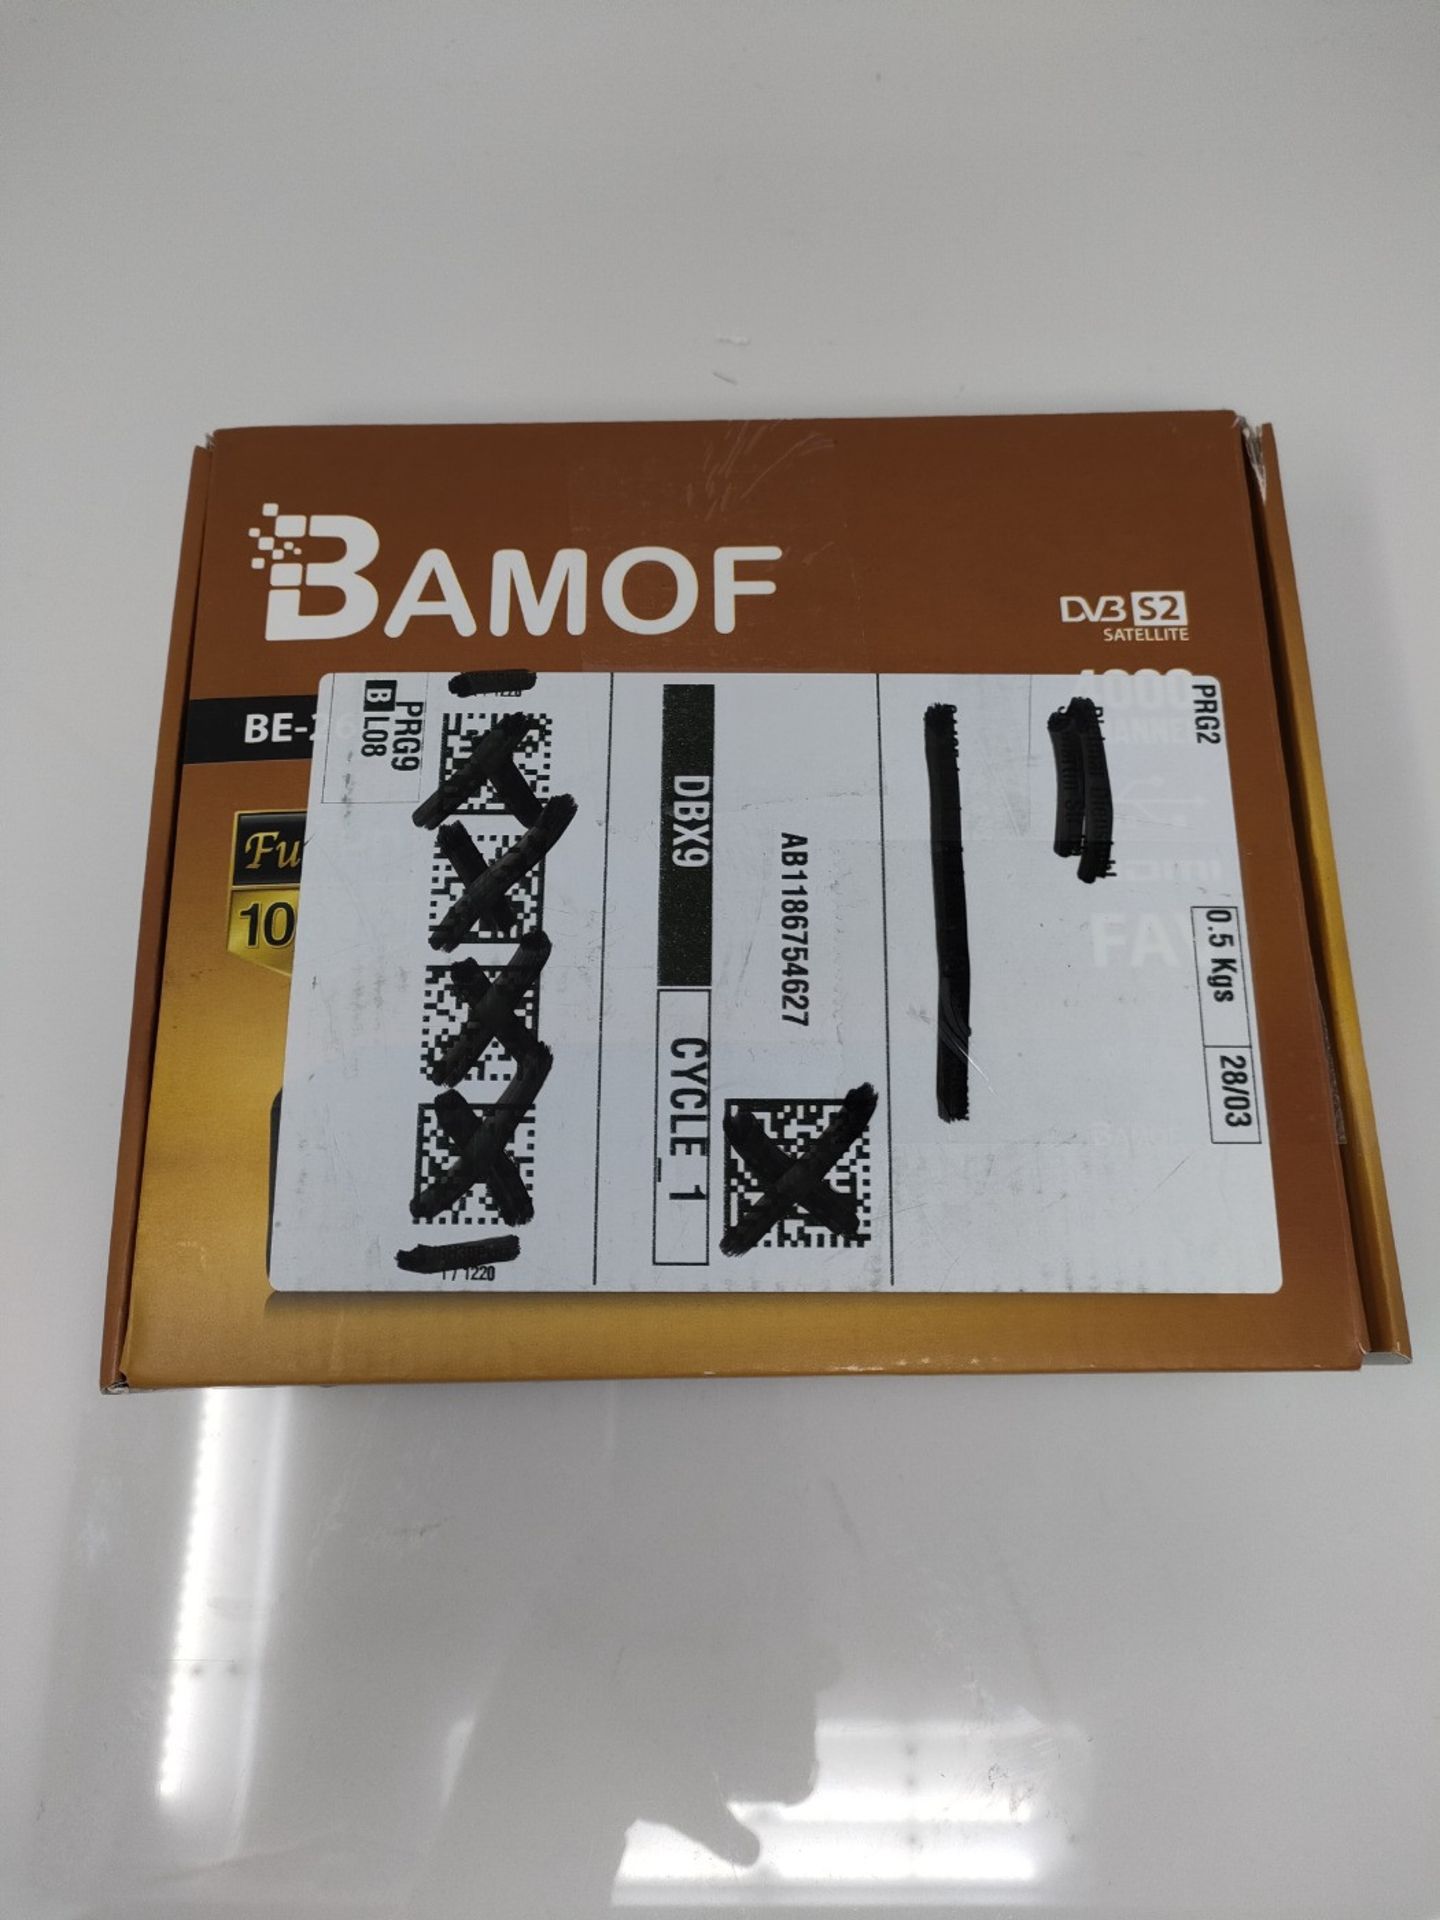 Bamof BE-2607 Digital Satellite Satellite Receiver (HDTV, DVB-S/S2, HDMI, SCART, 2x US - Bild 2 aus 3